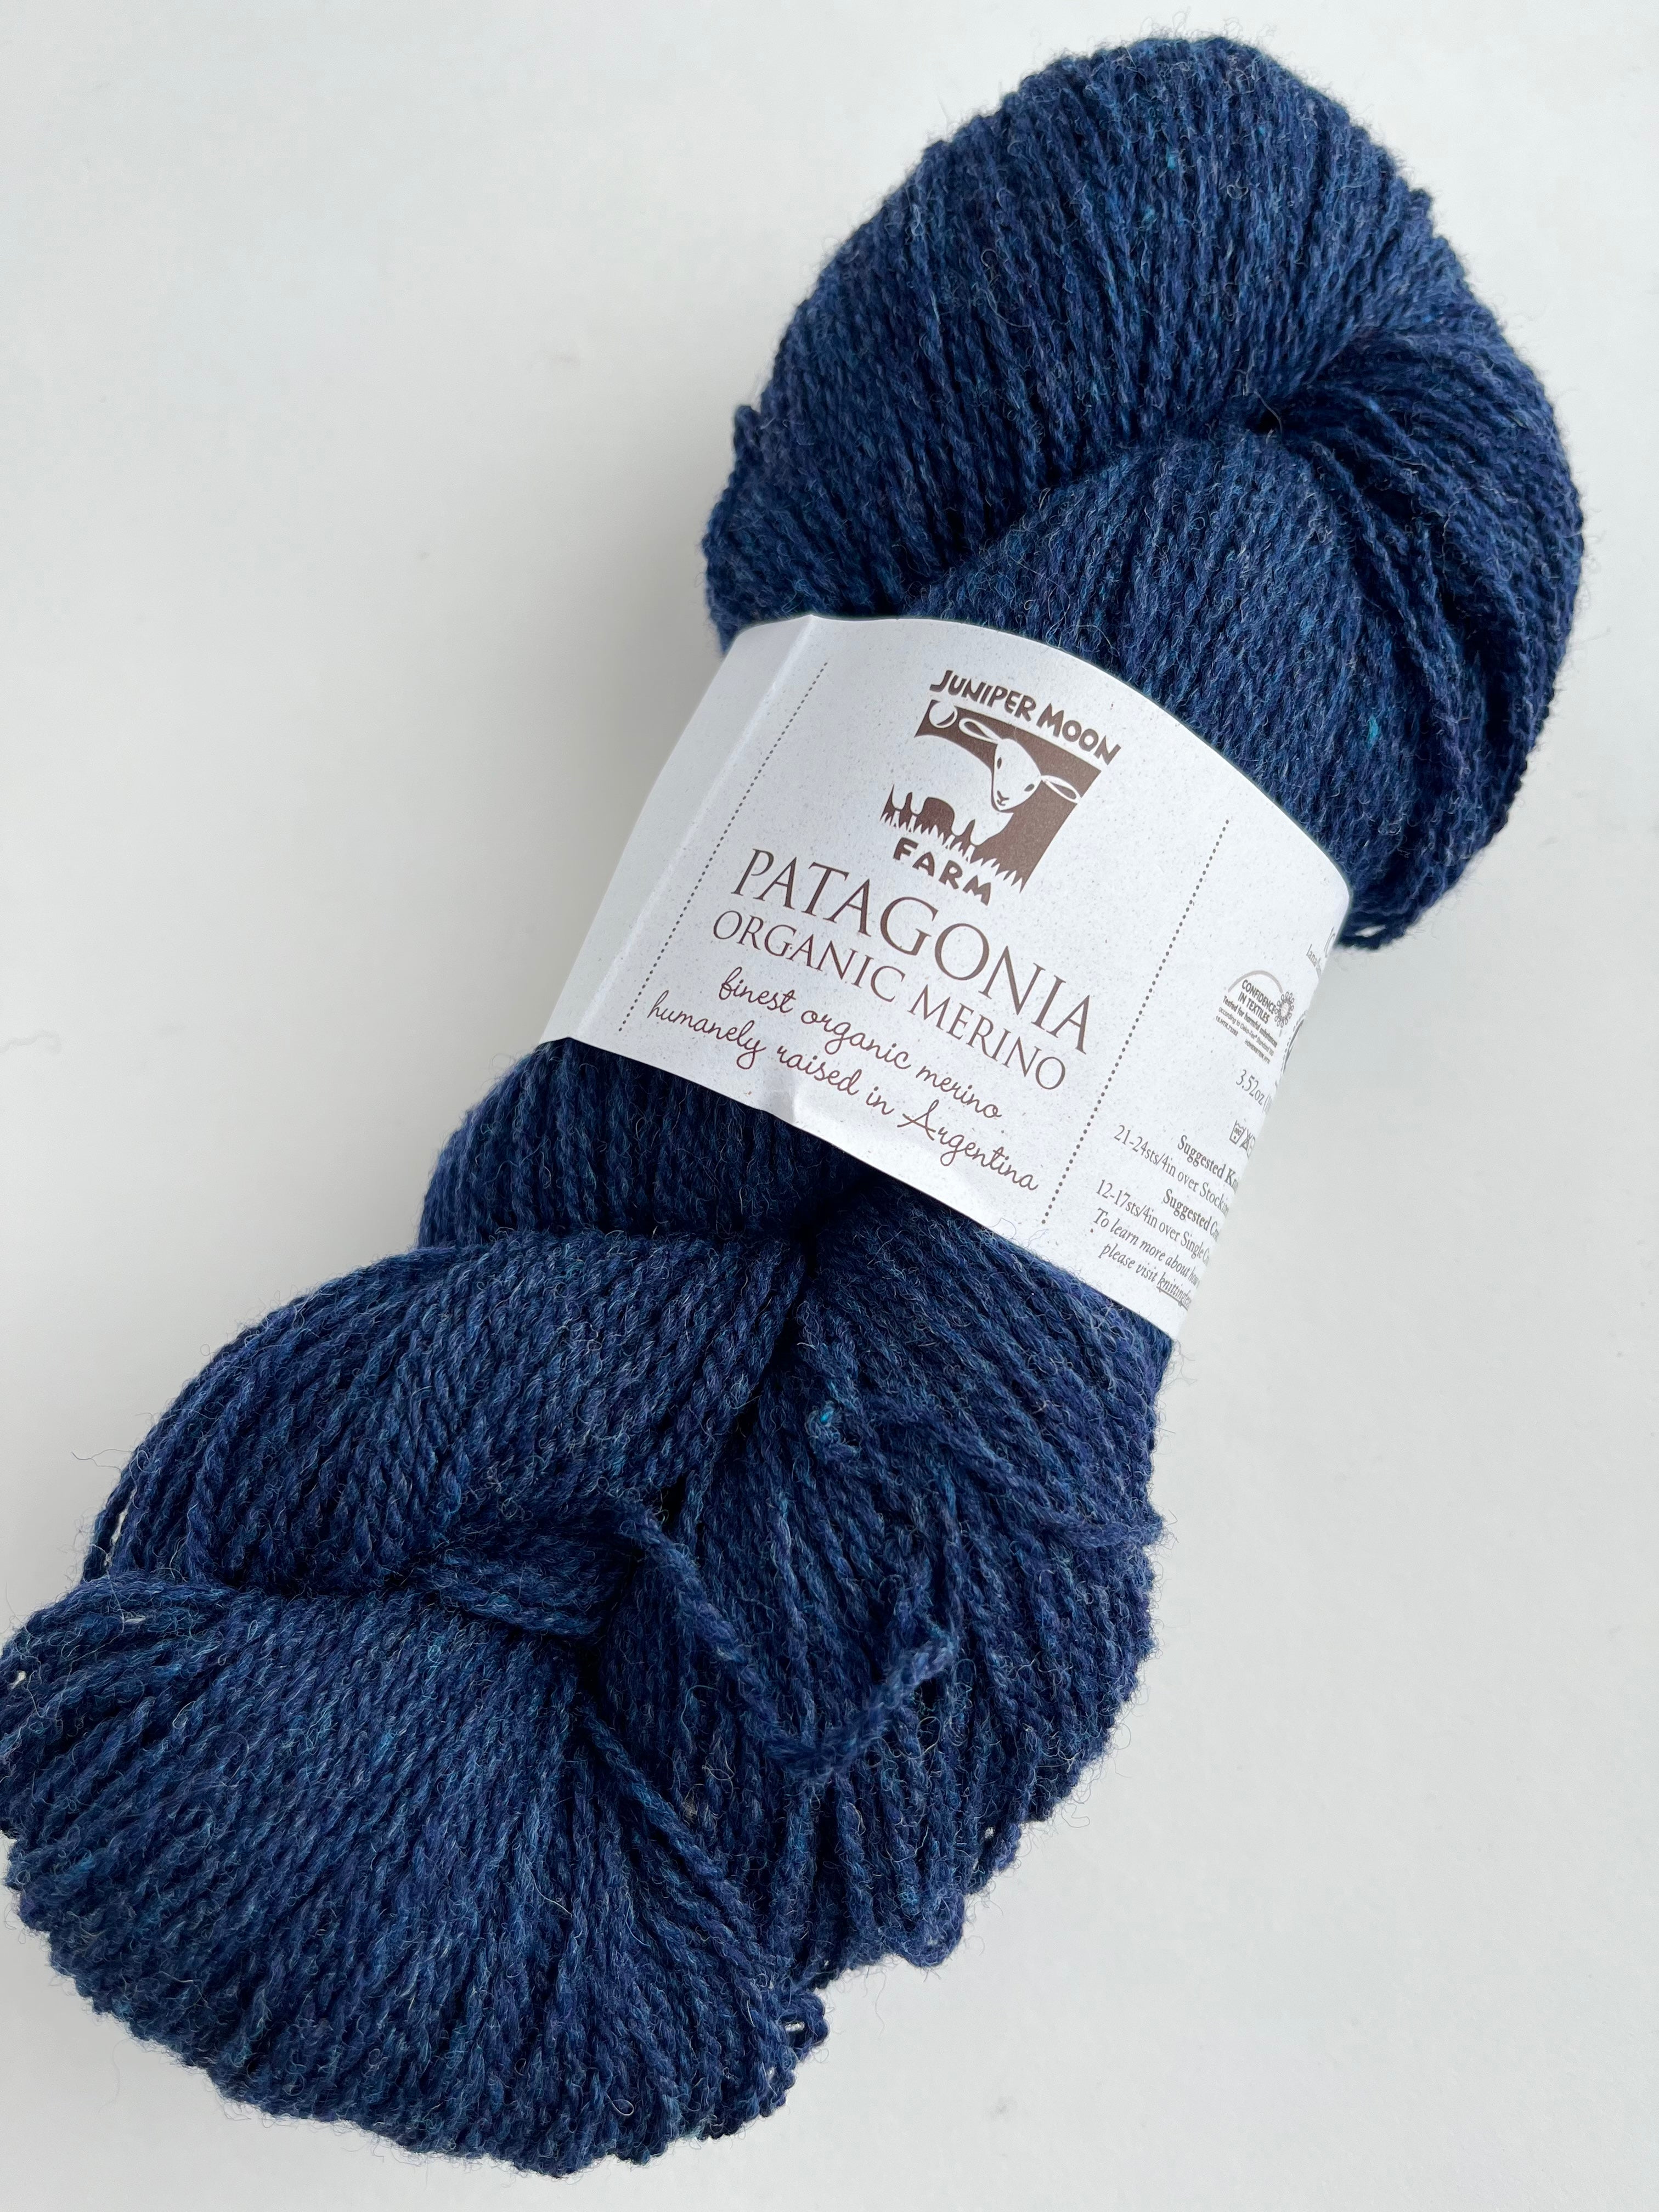 Patagonia Organic Merino yarn from Juniper Moon